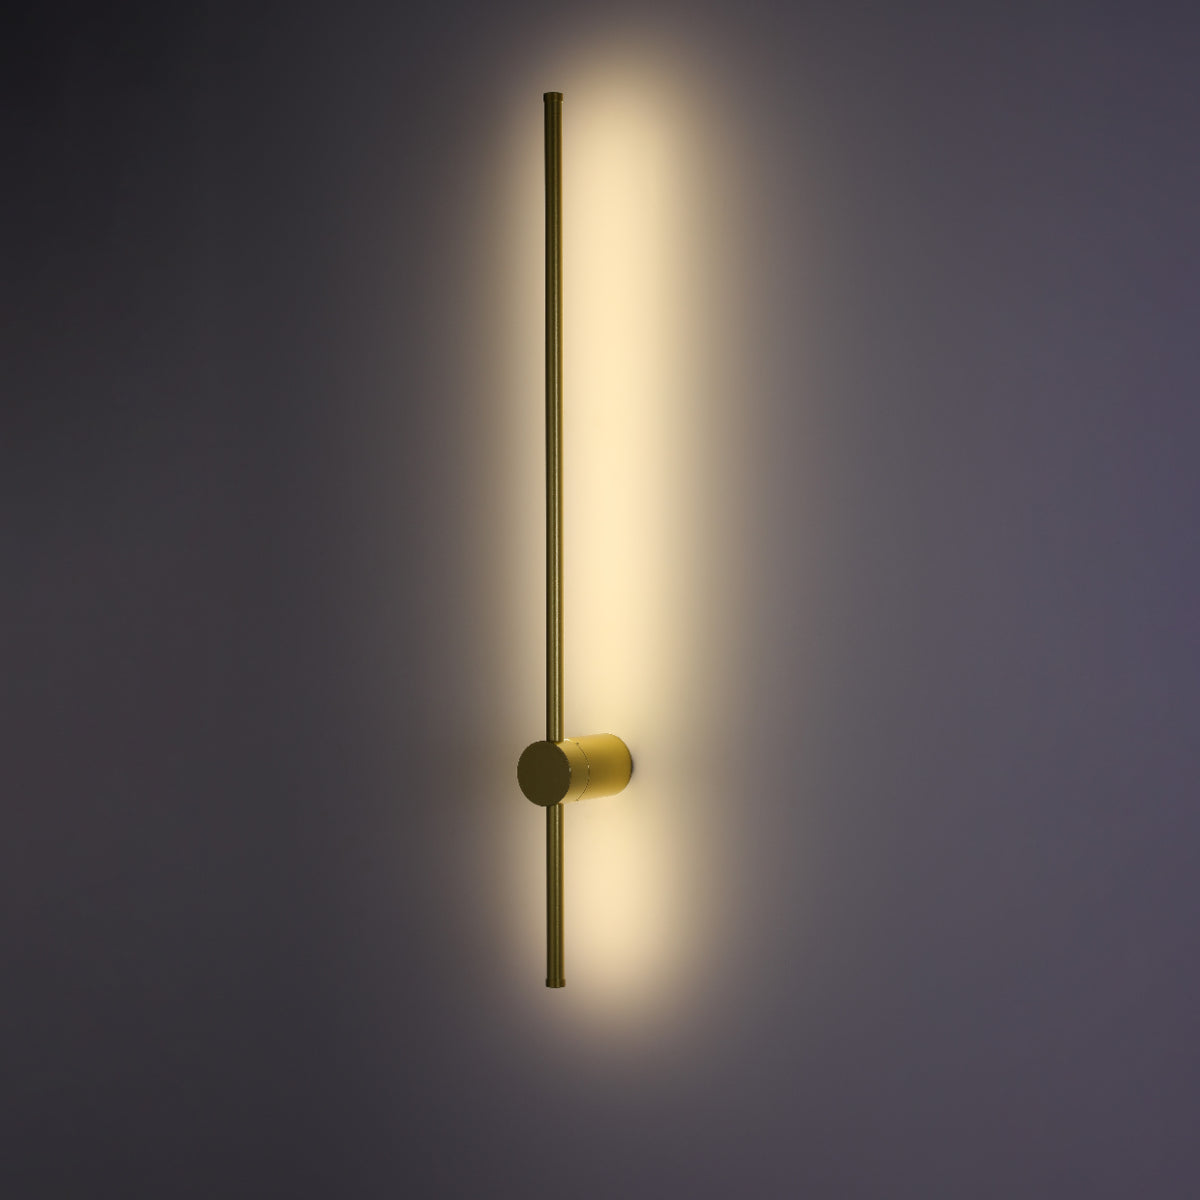 Usage of Minimalist Linear Wall Sconce Light 151-19980